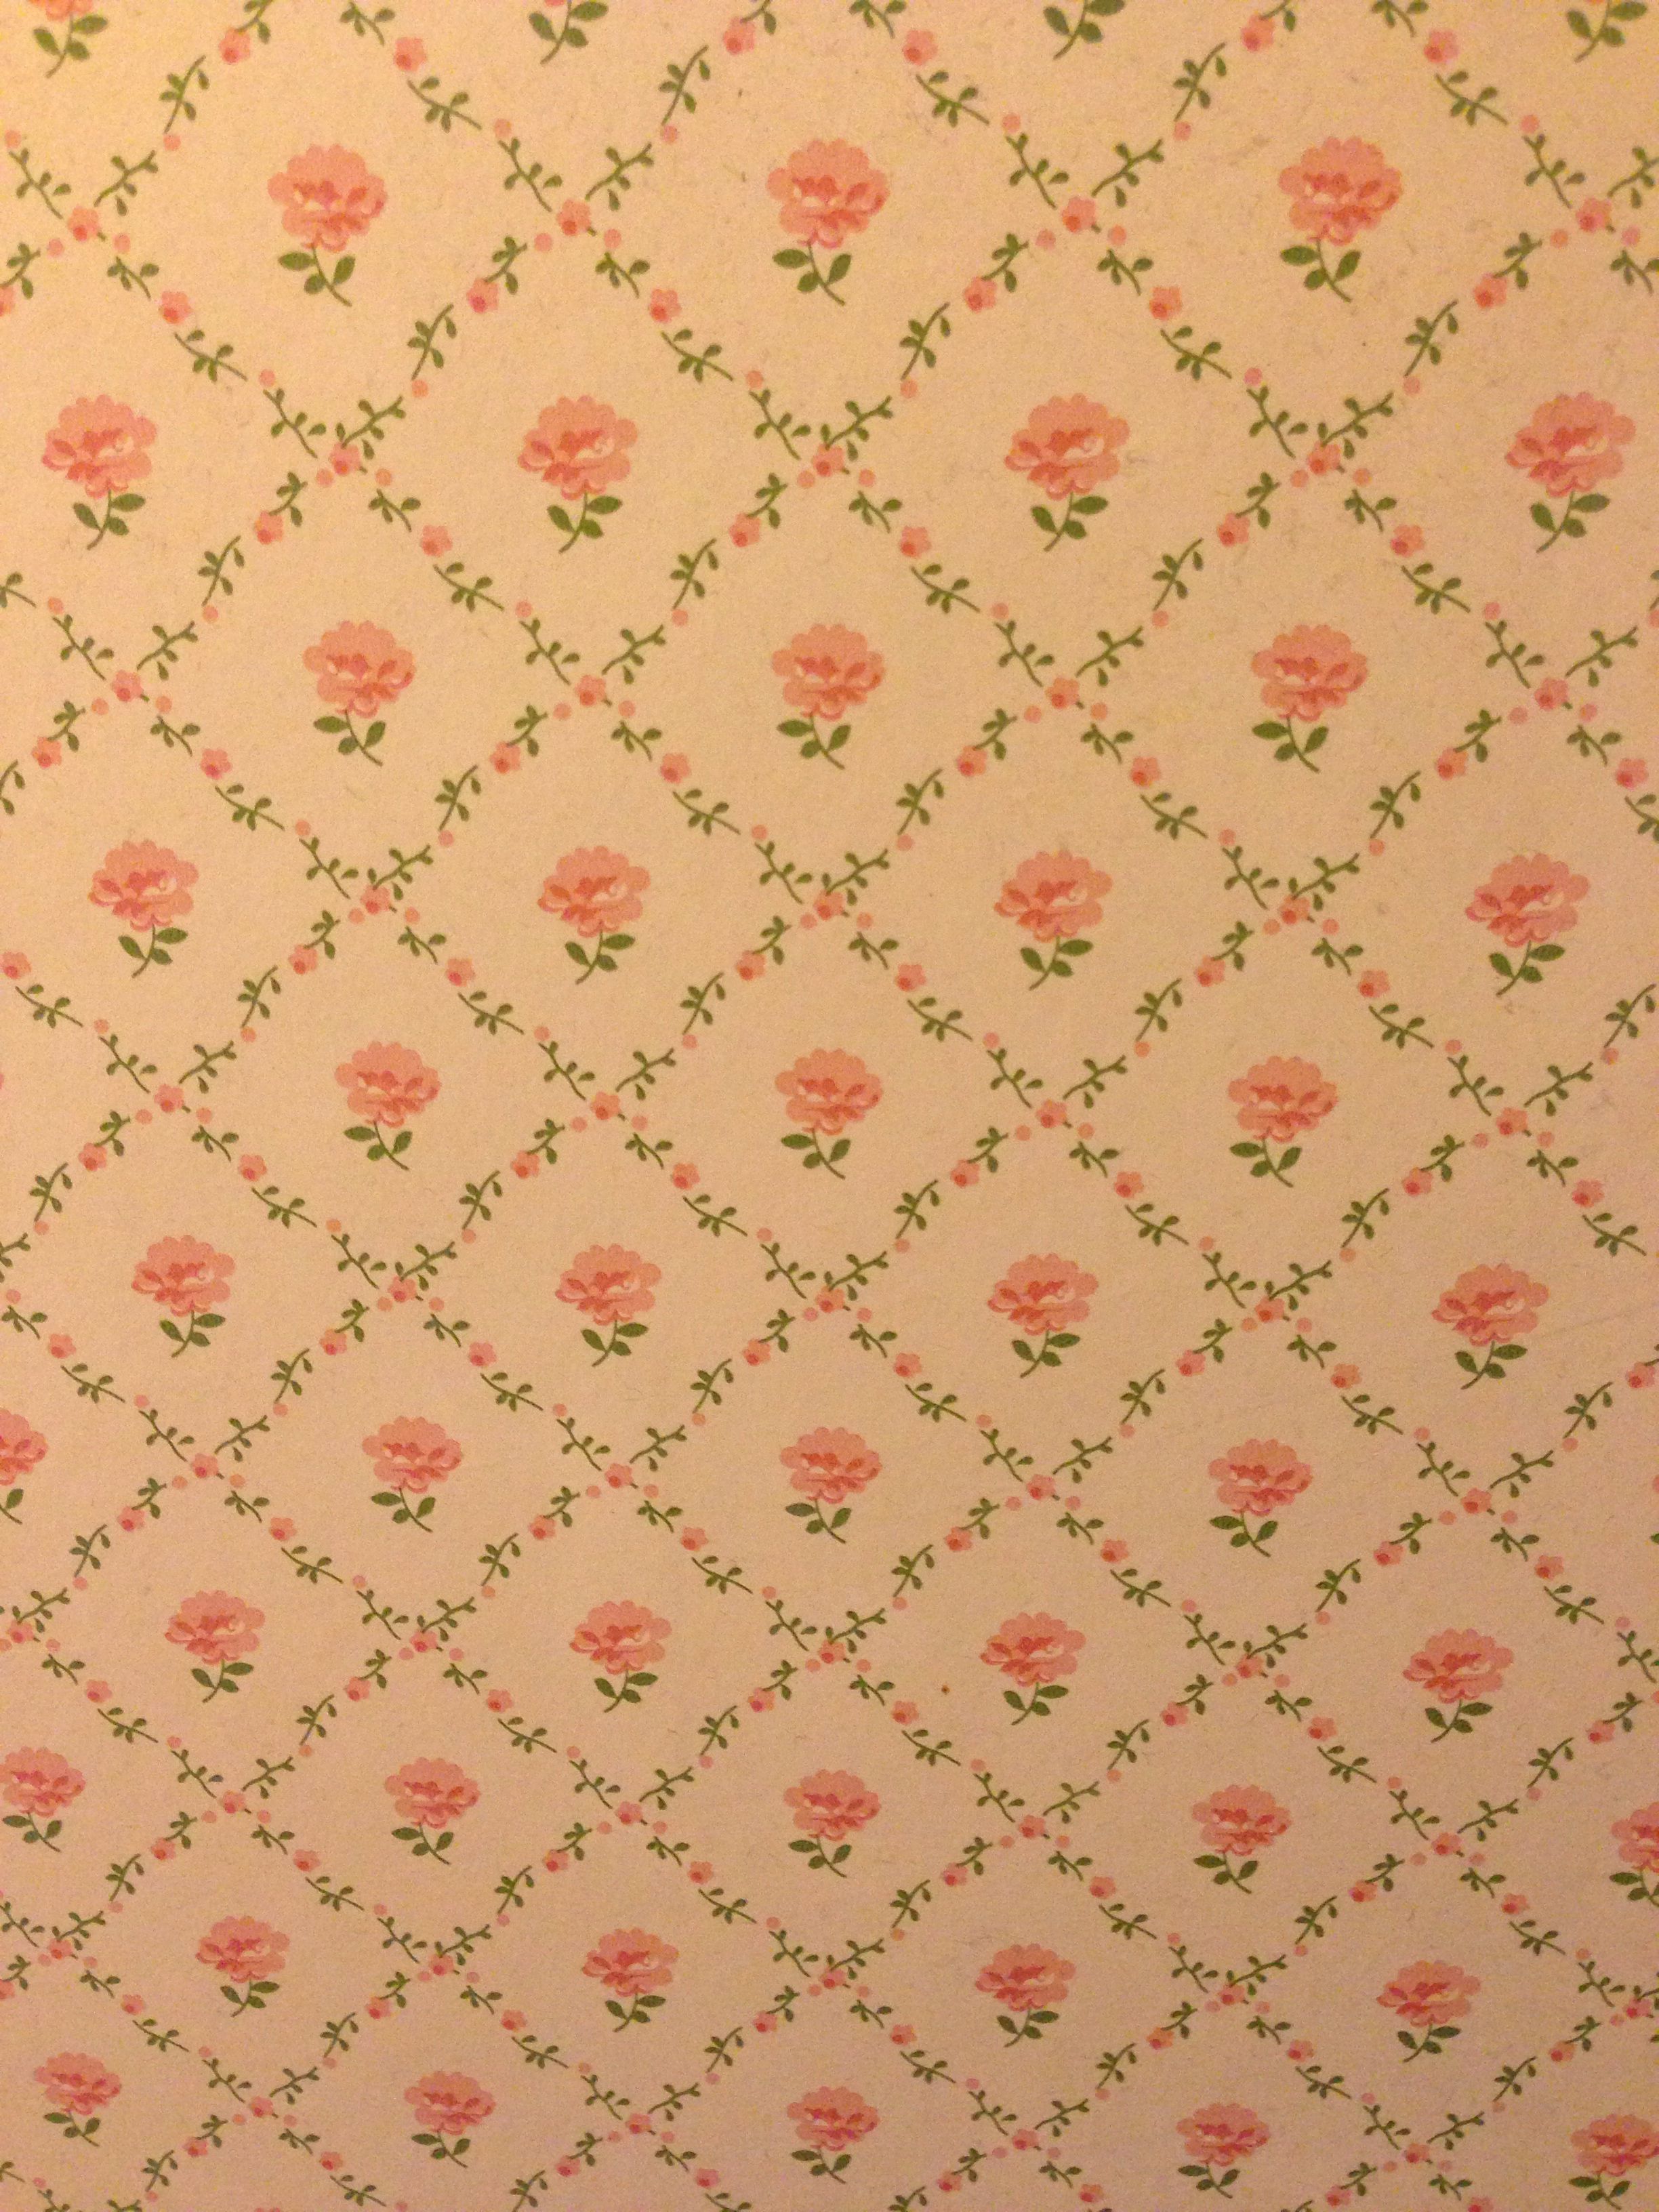 80's Wallpaper For House - HD Wallpaper 